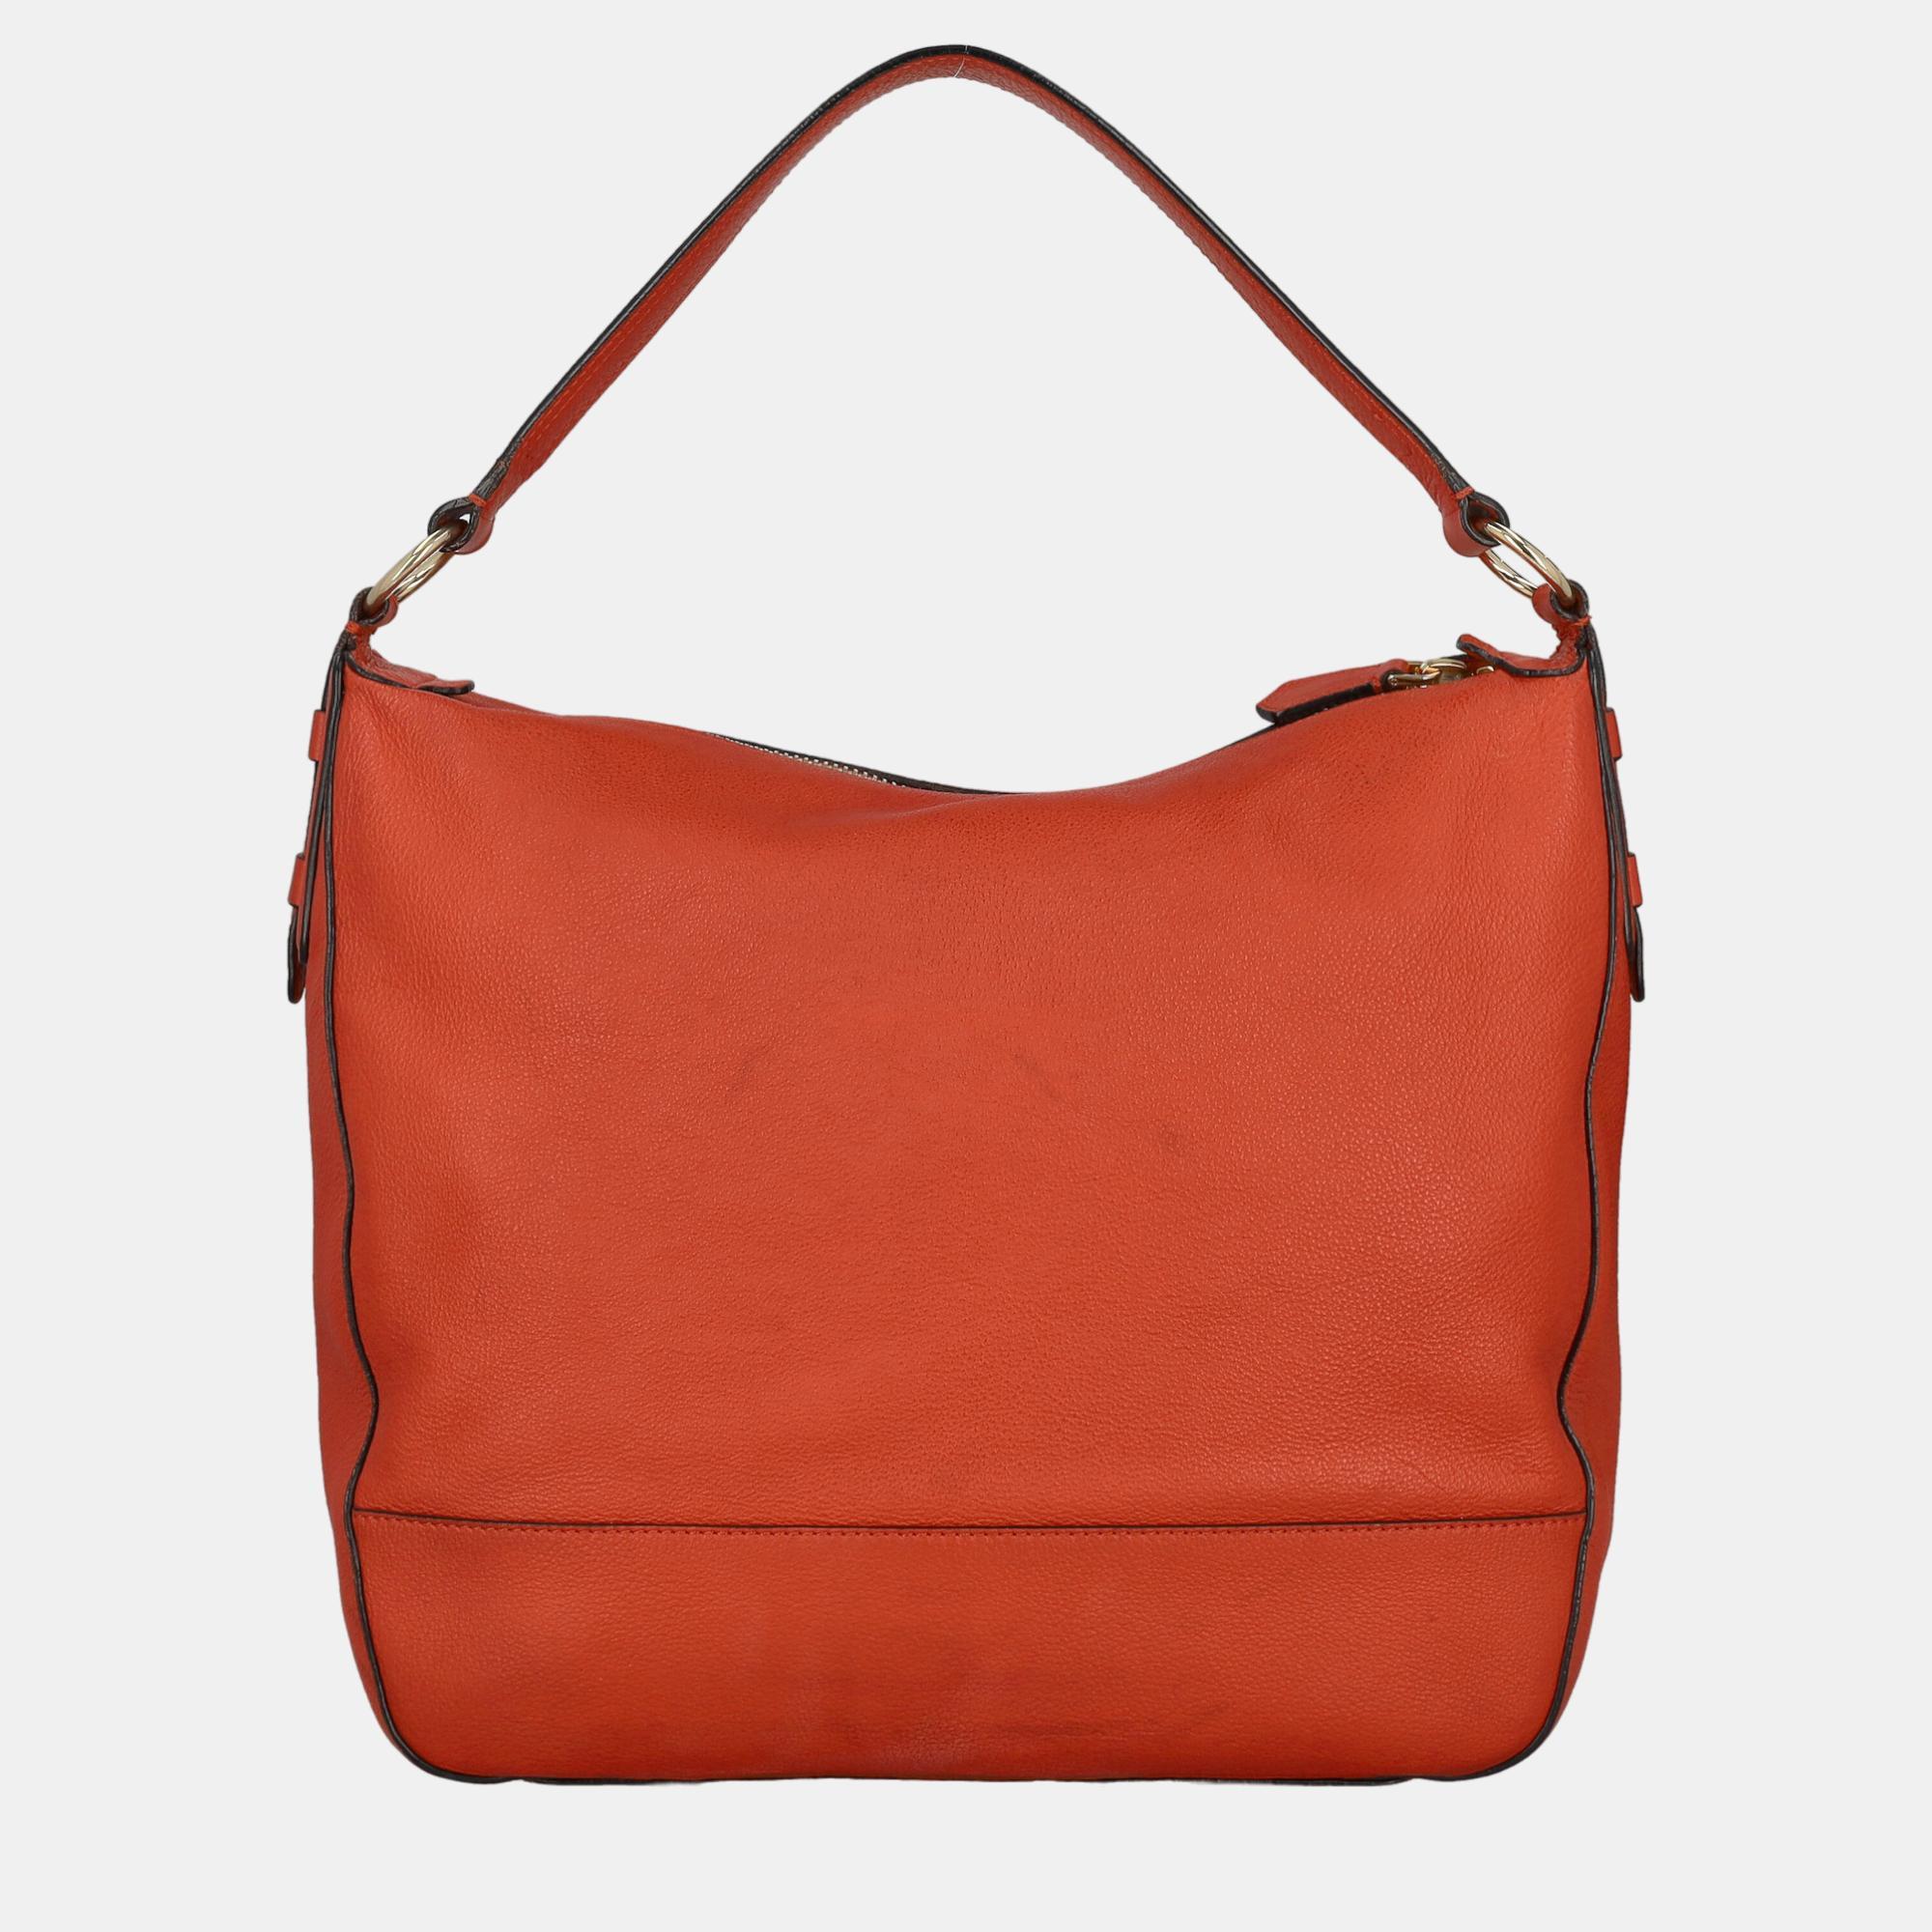 Moschino  Women's Leather Hobo Bag - Orange - One Size